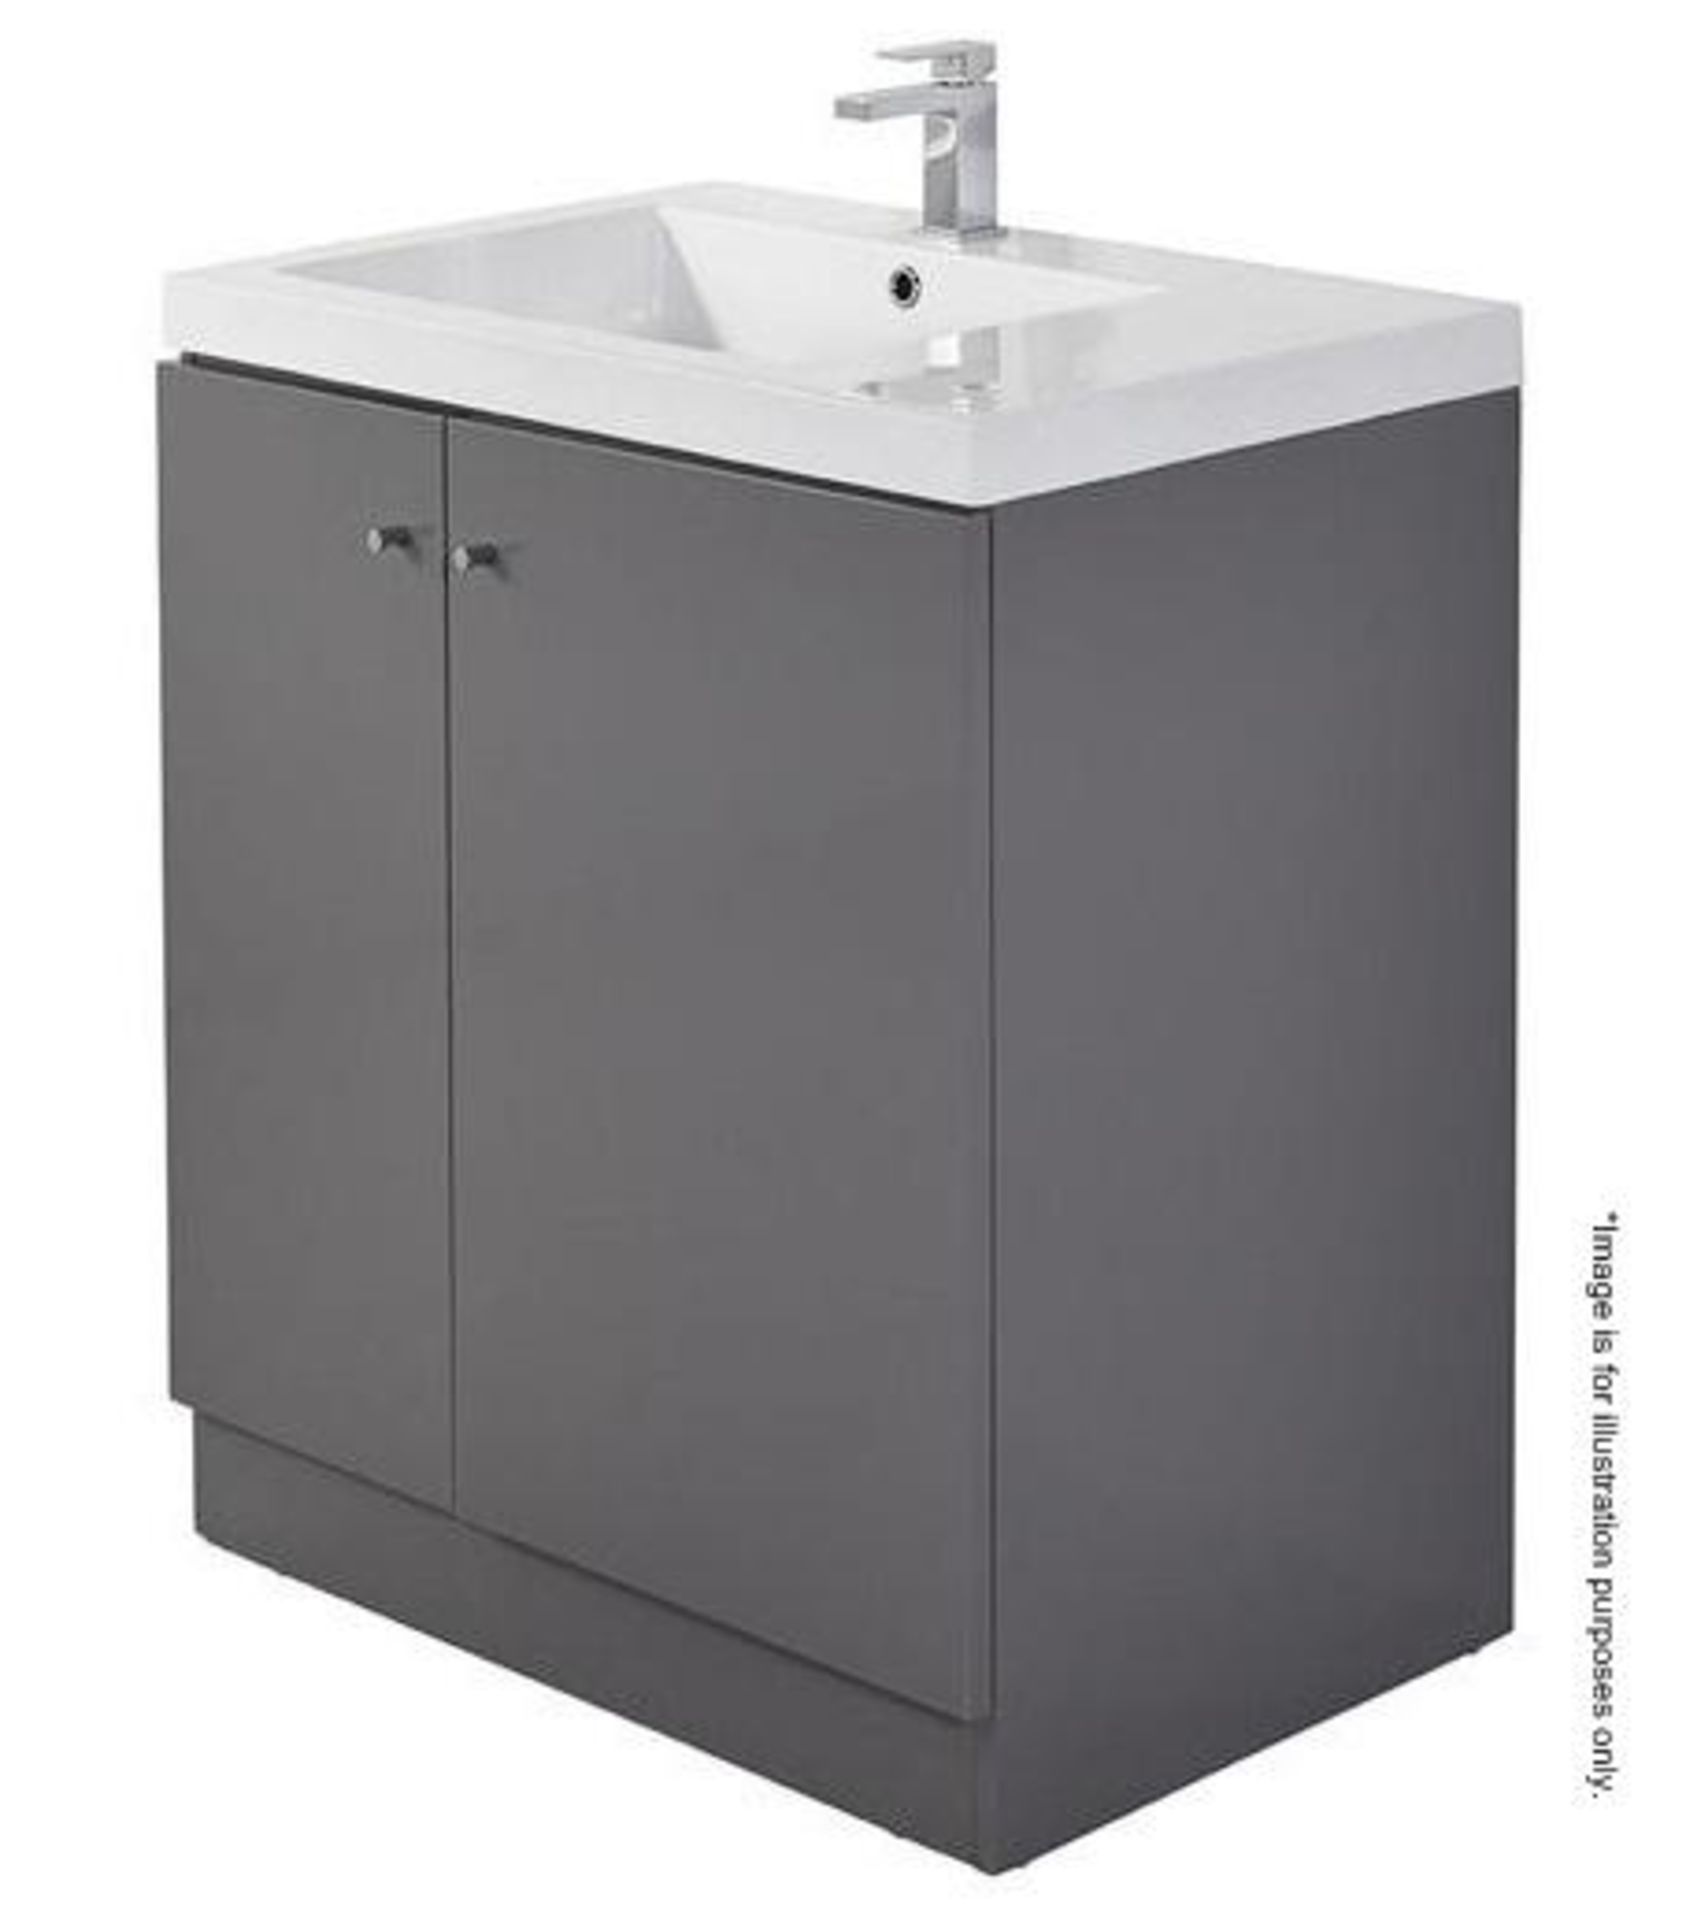 10 x Alpine Duo 750 Floorstanding Vanity Units In Gloss Grey - Dimensions: H80 x W75 x D49.5cm - - Image 3 of 4